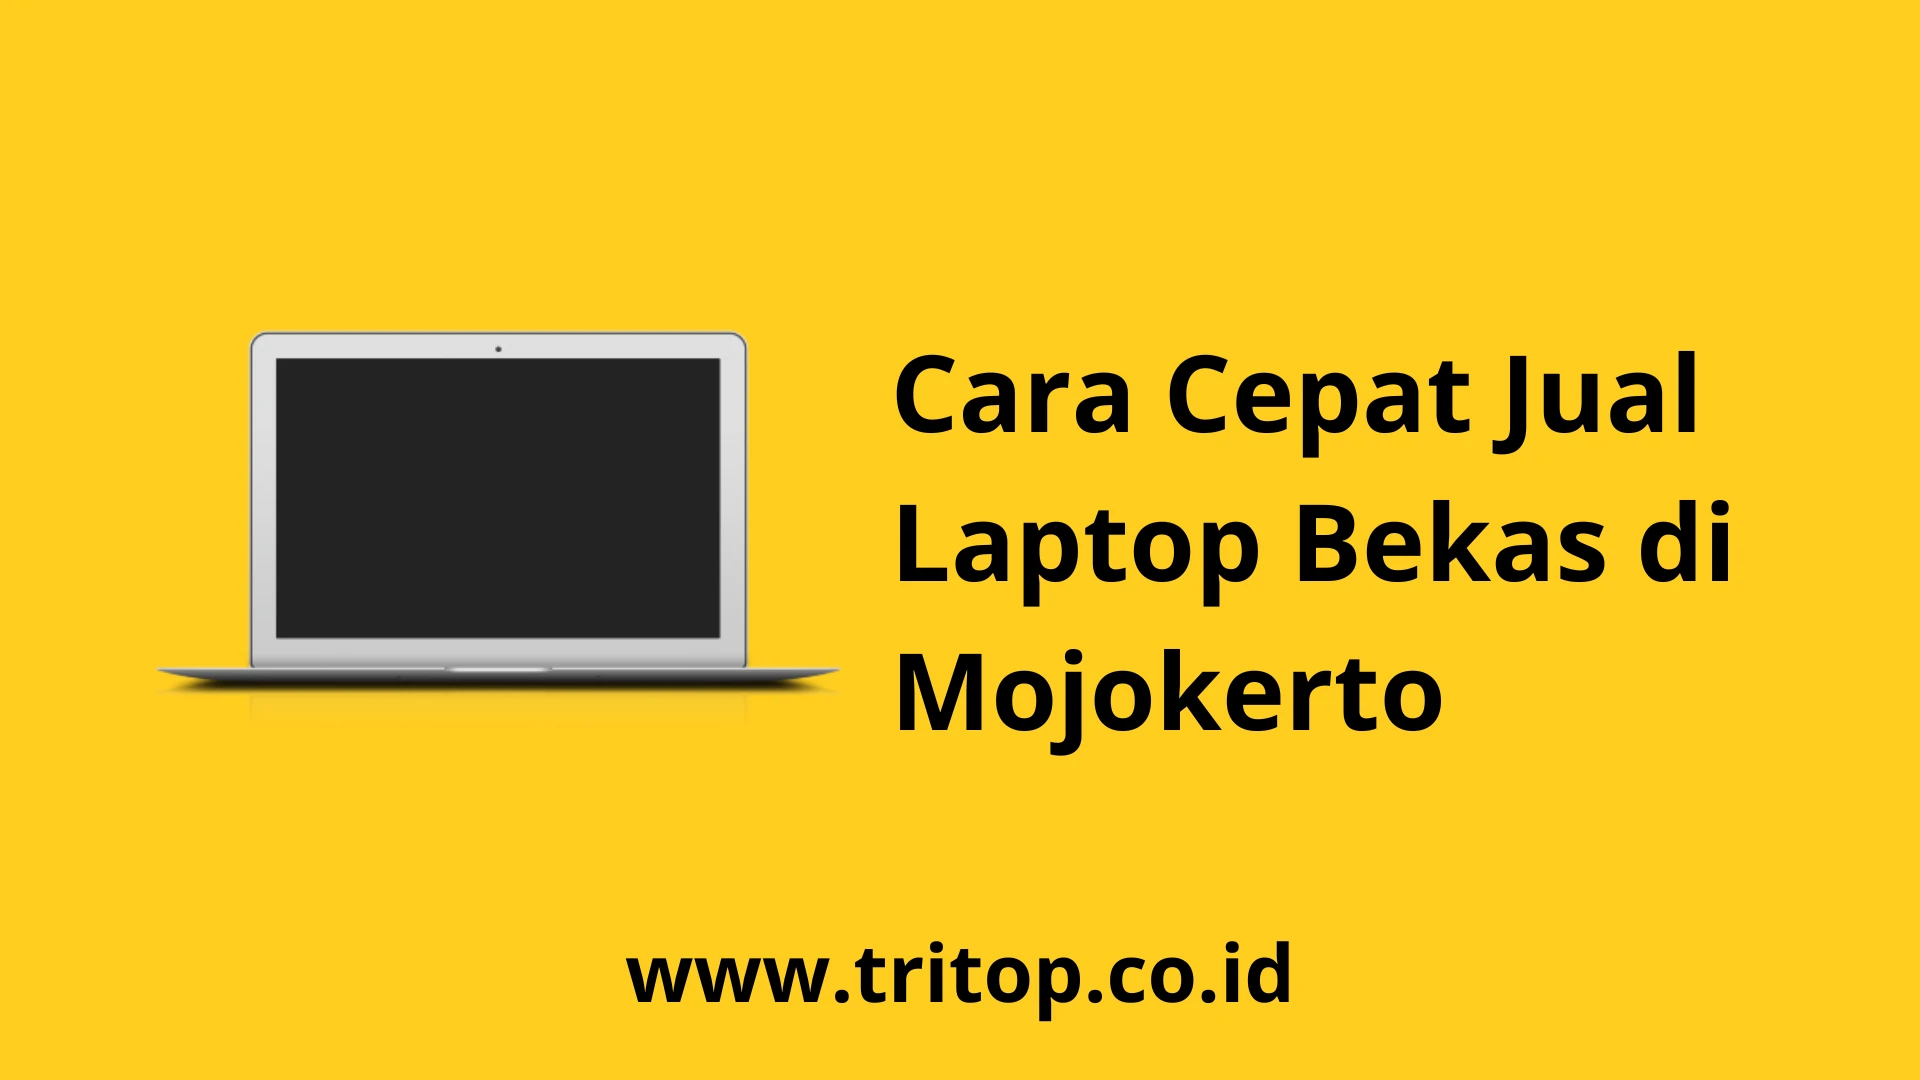 Jual Laptop Bekas Mojokerto www.tritop.co.id